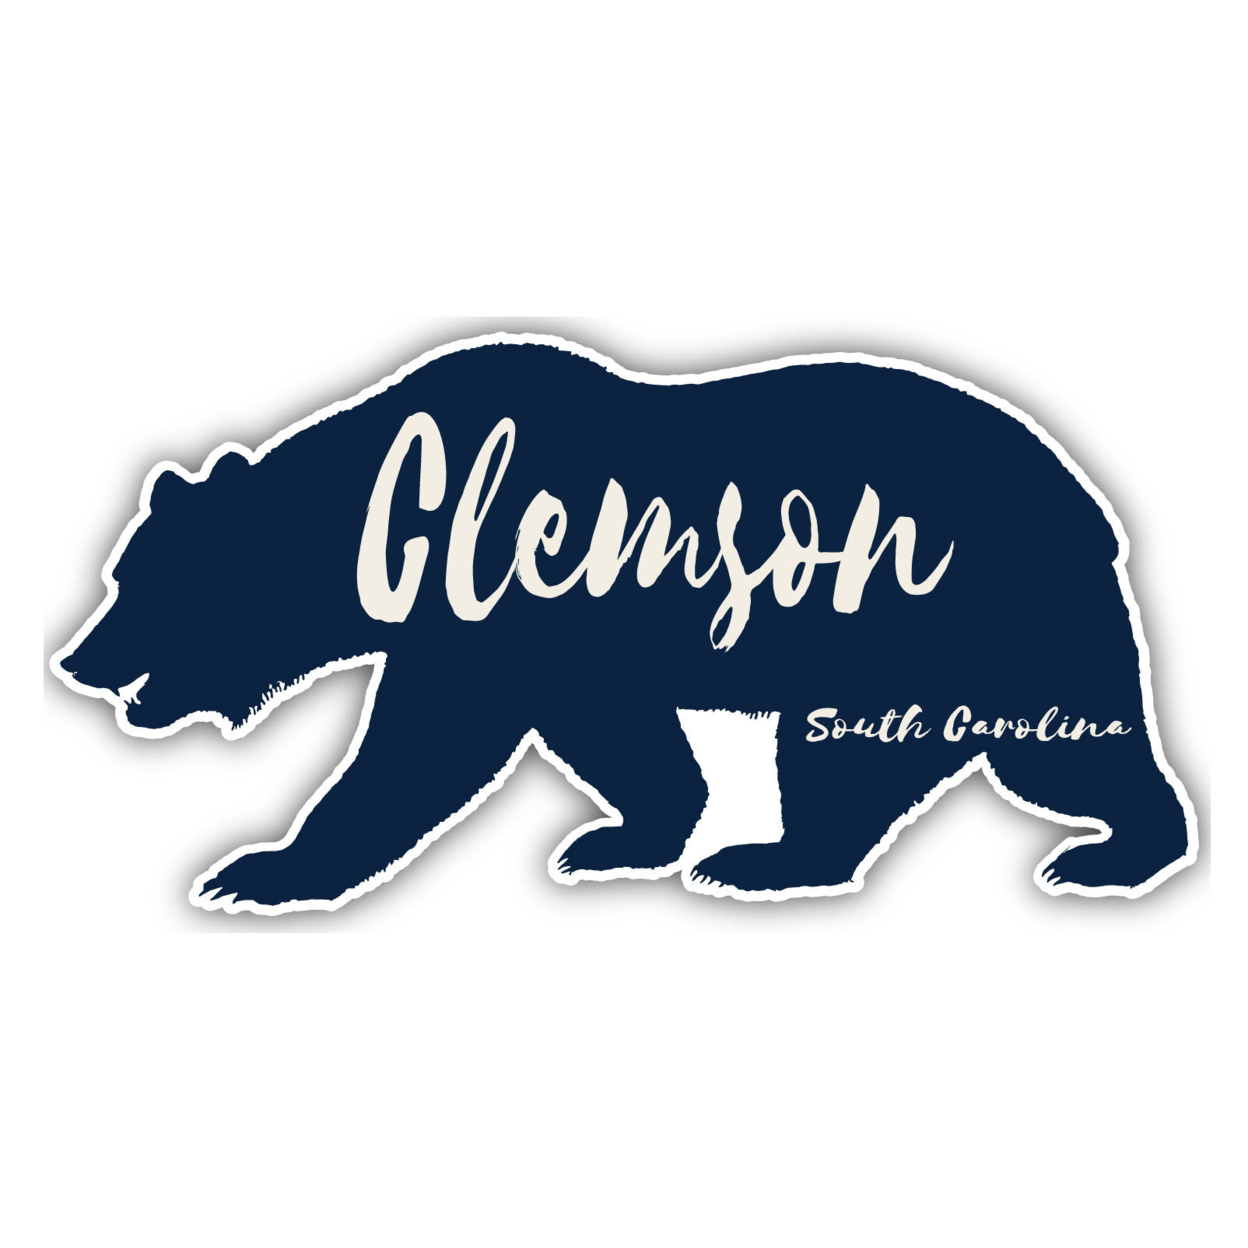 Clemson South Carolina Souvenir Decorative Stickers (Choose Theme And Size) - Single Unit, 6-Inch, Camp Life